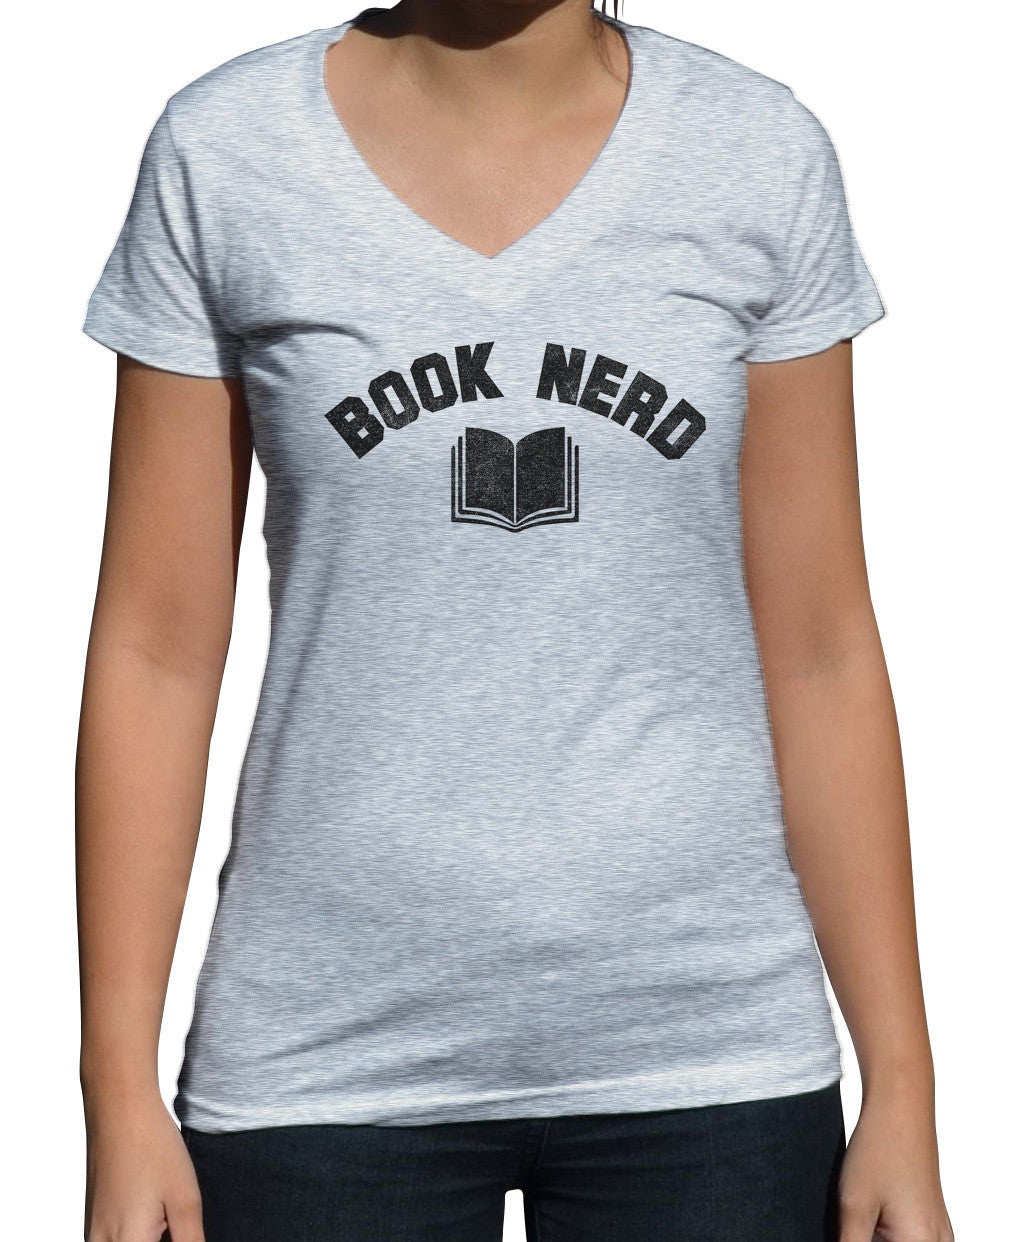 BoredWalk Men's Book Nerd Vintage T-Shirt Geeky Nerdy Literary, X-Large / Heather